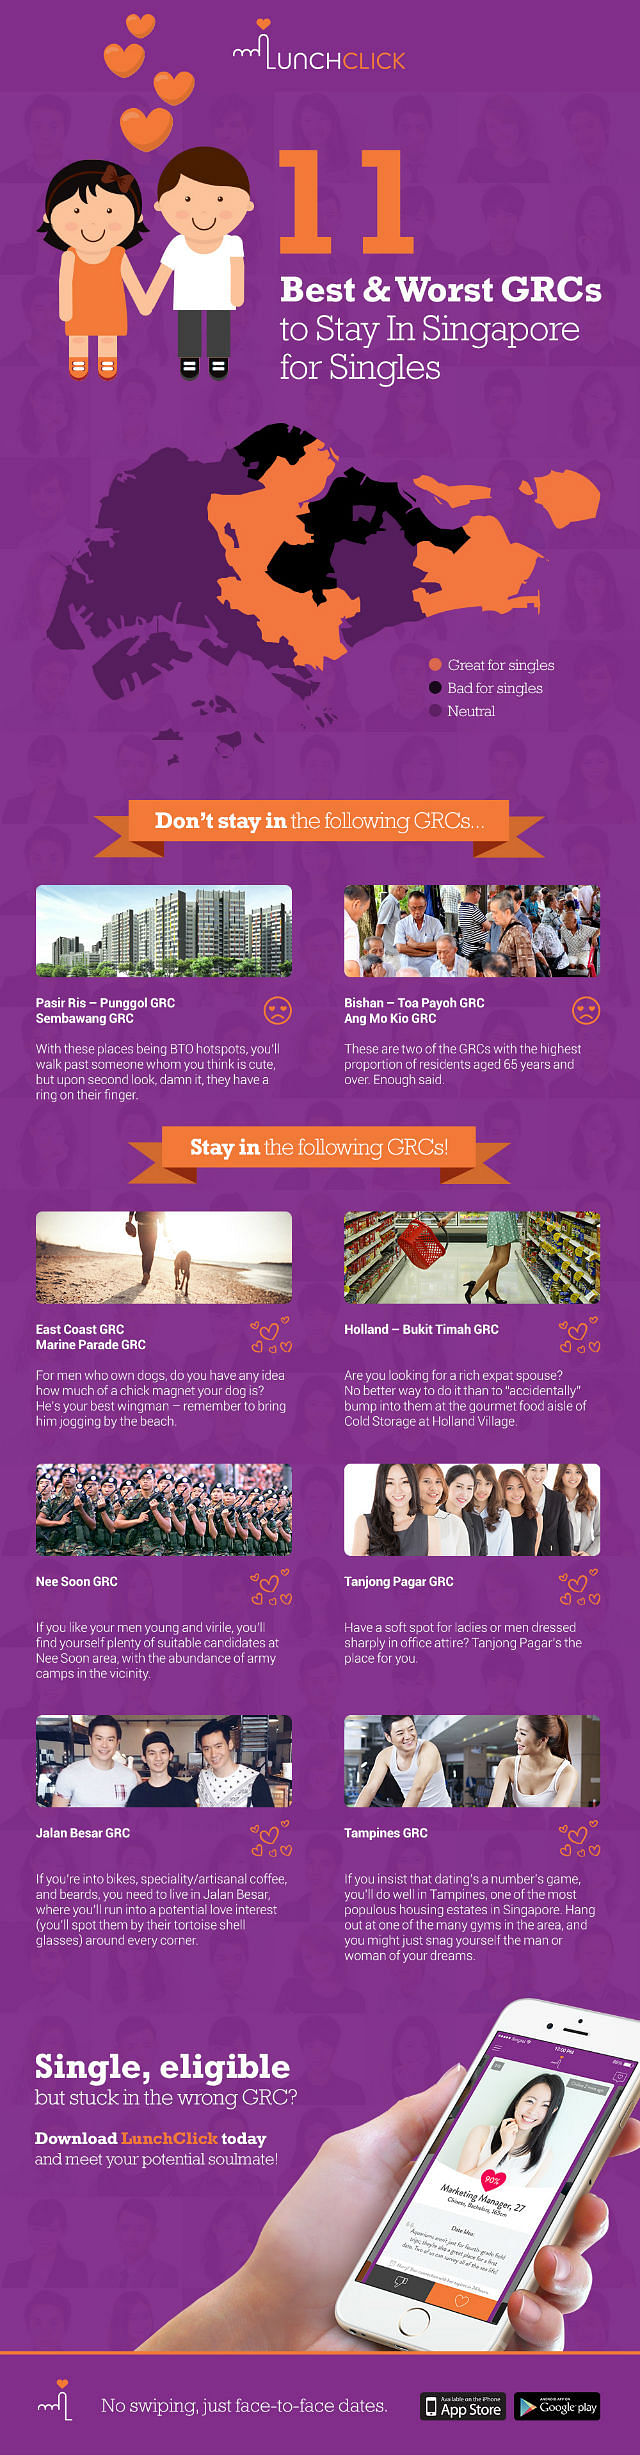 11 best or worst GRCs in Singapore for singles infographic.jpg